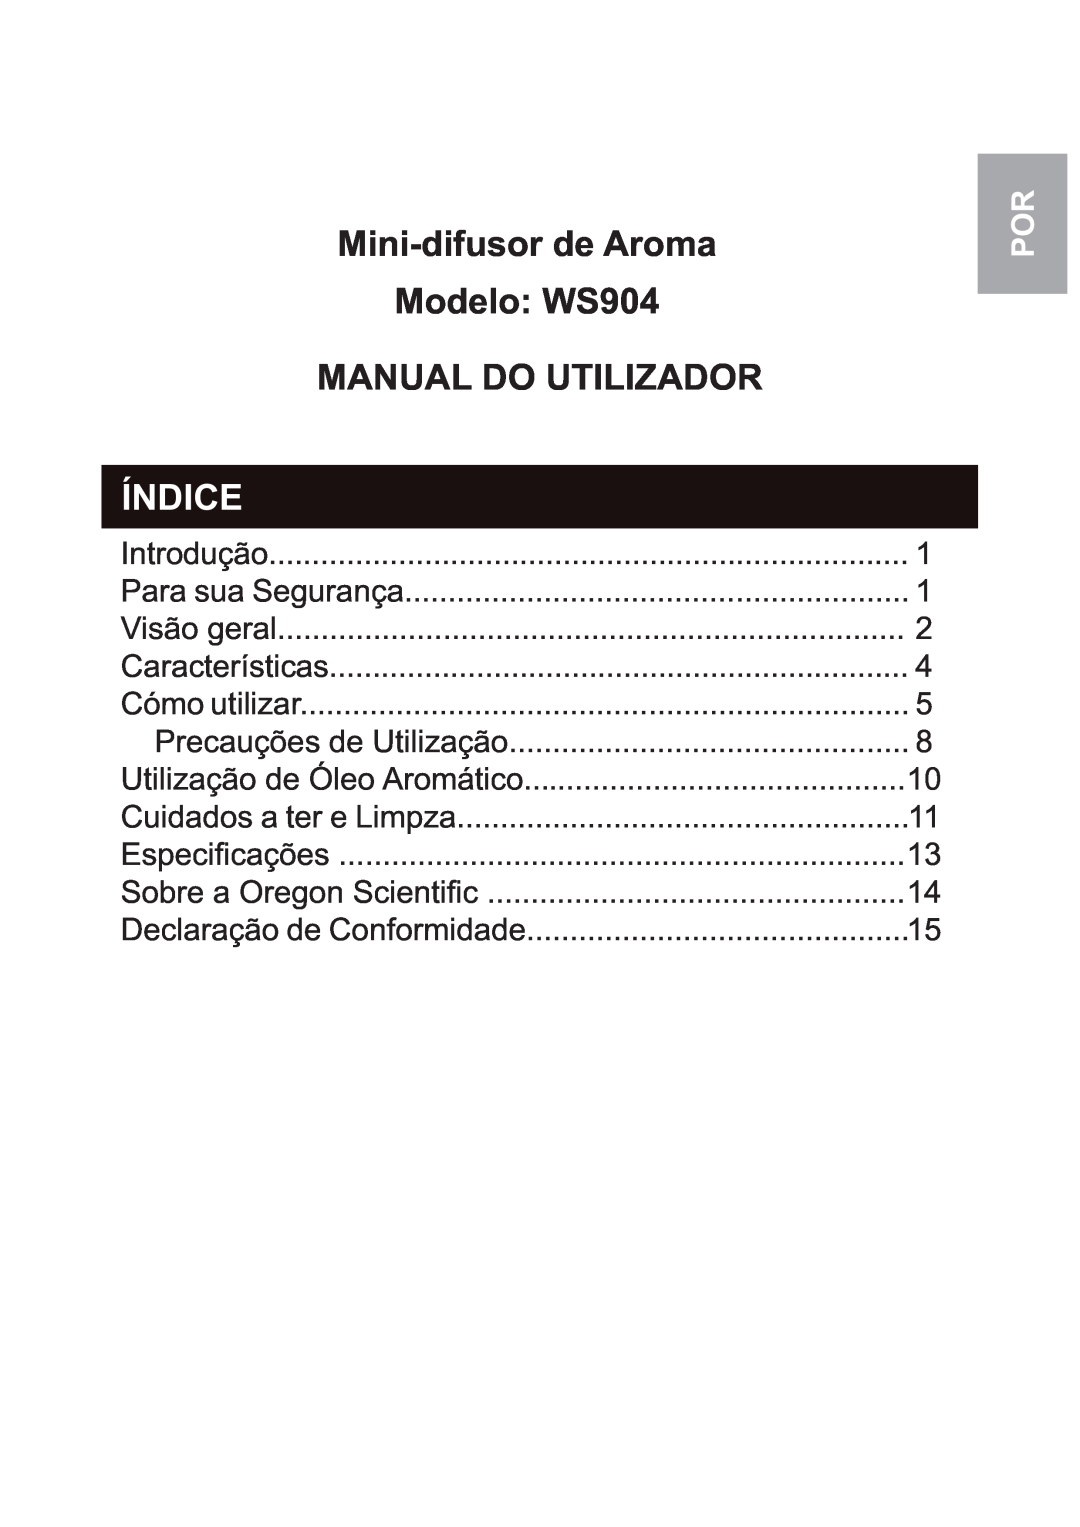 Oregon Scientific user manual Mini-difusorde Aroma Modelo: WS904, Manual Do Utilizador, Índice 